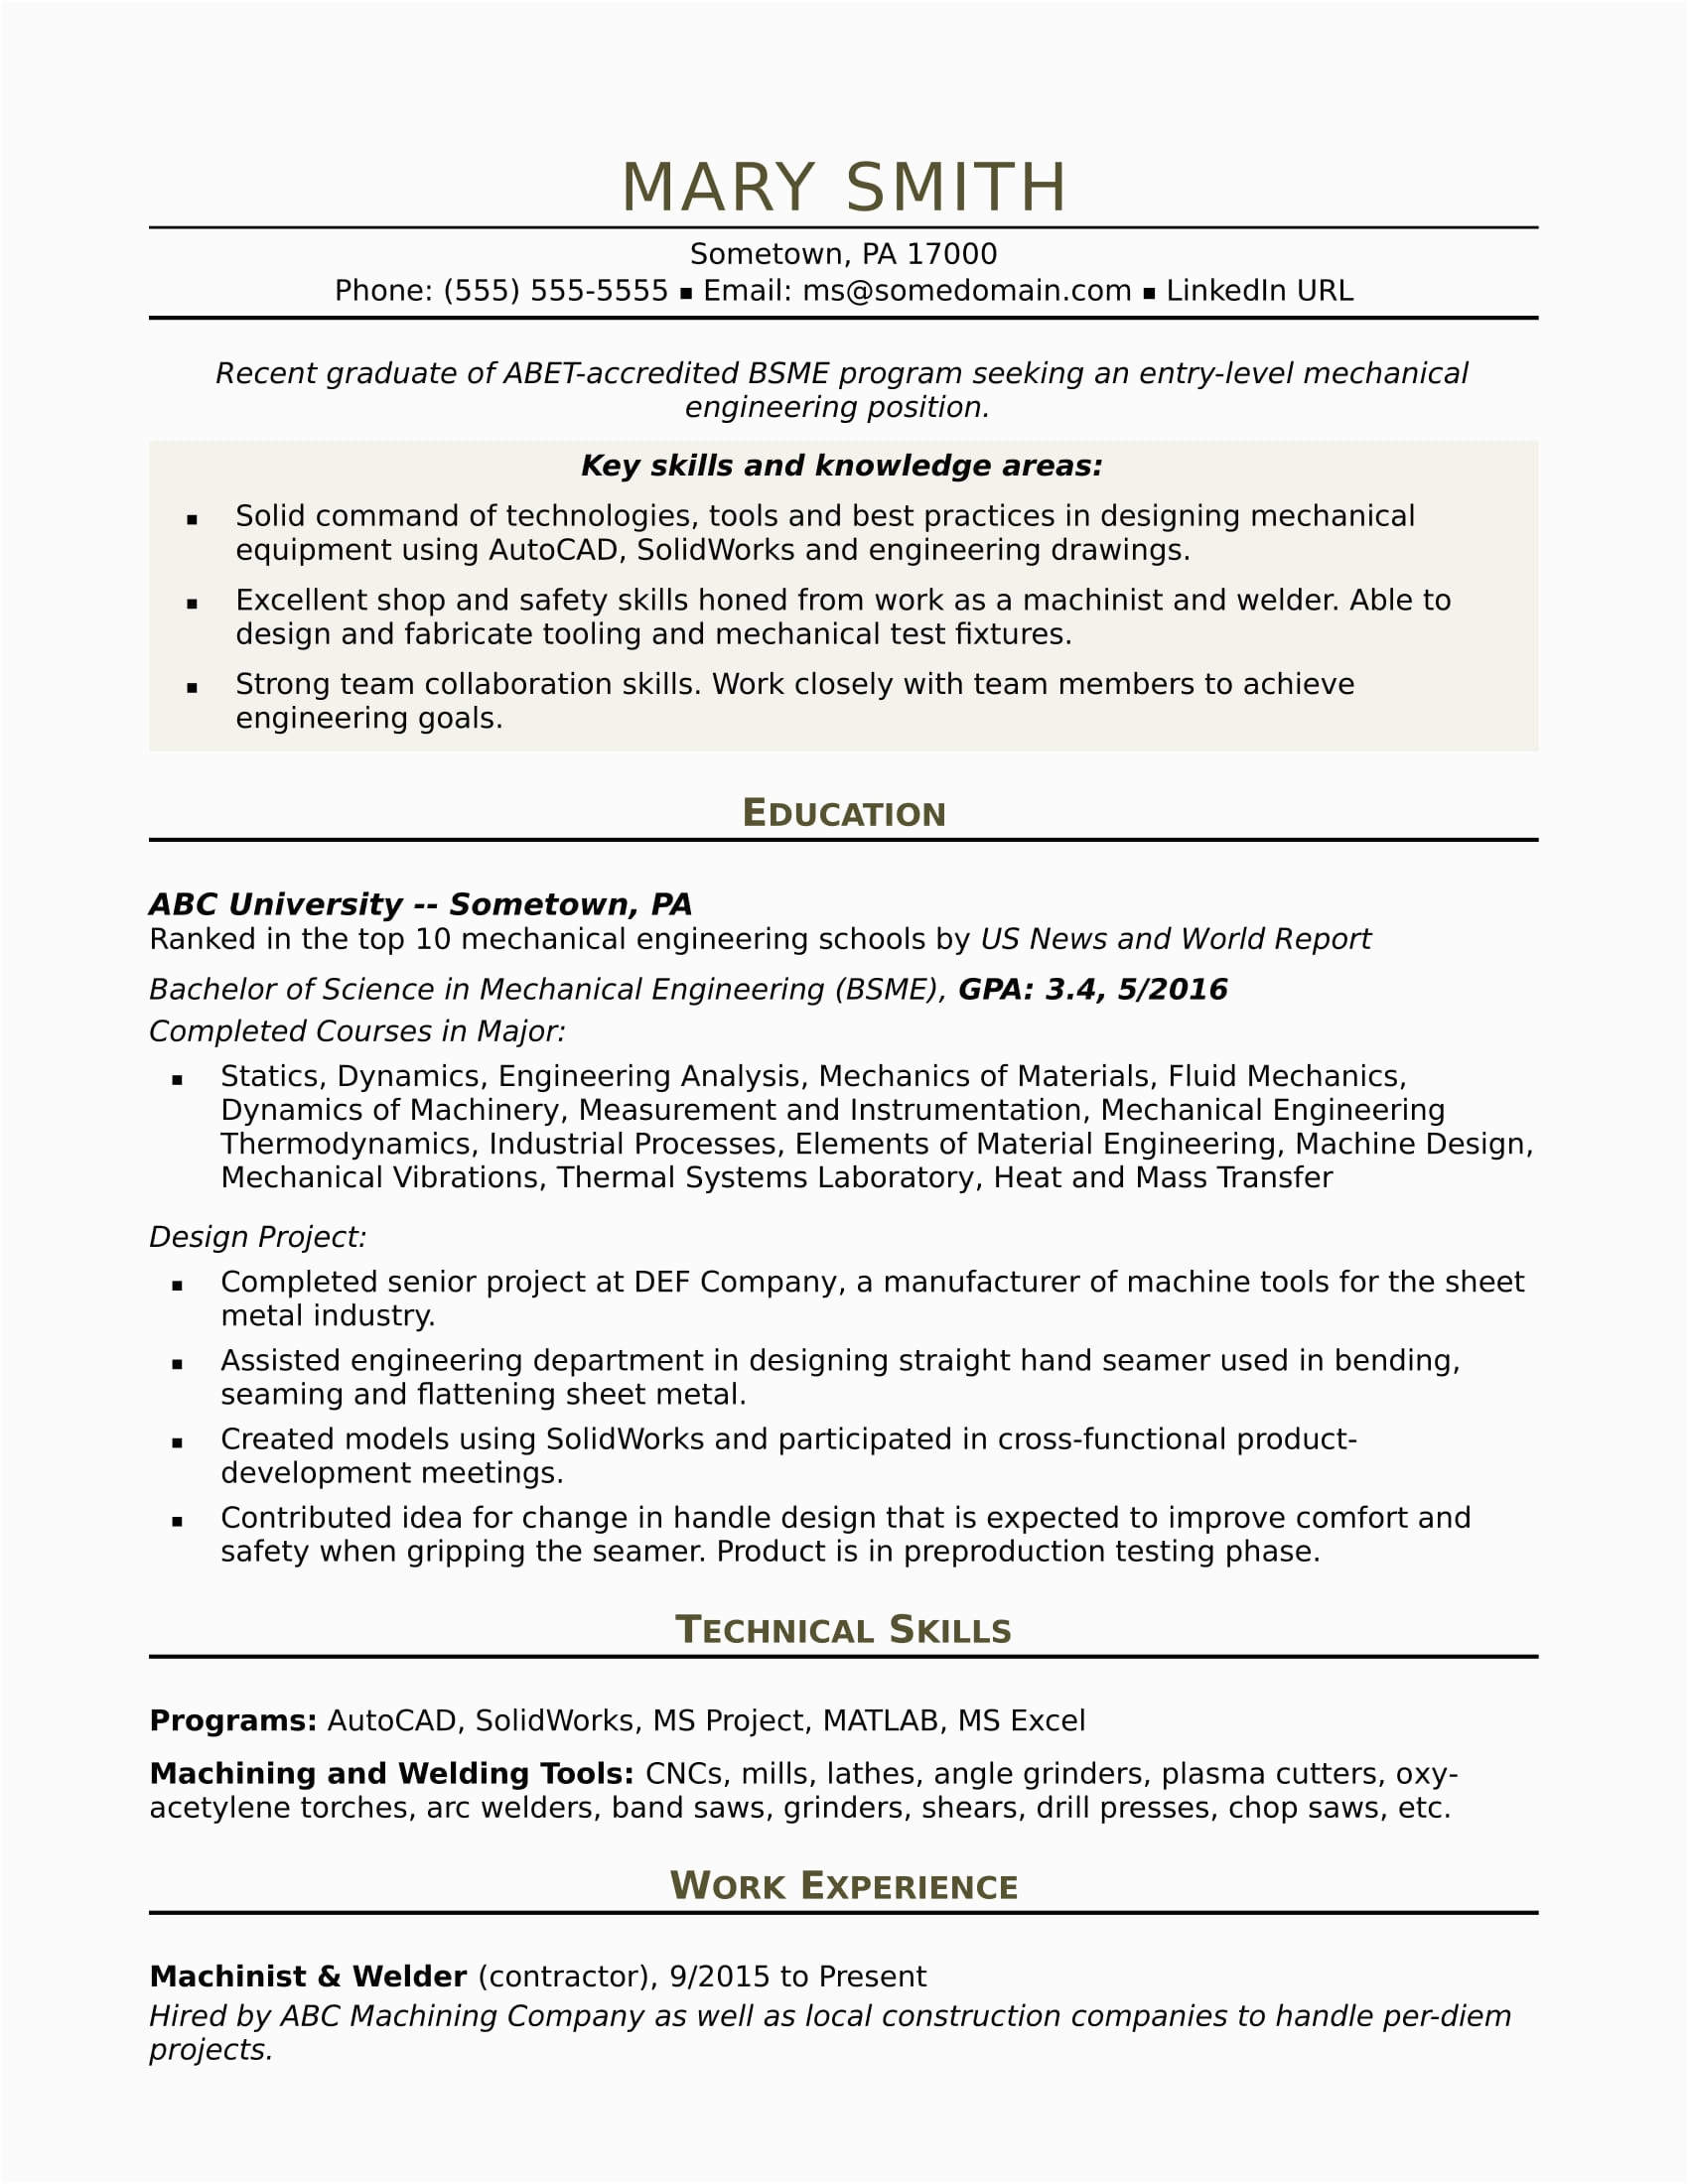 Sample Resume format for Mechanical Engineer Sample Resume for An Entry Level Mechanical Engineer